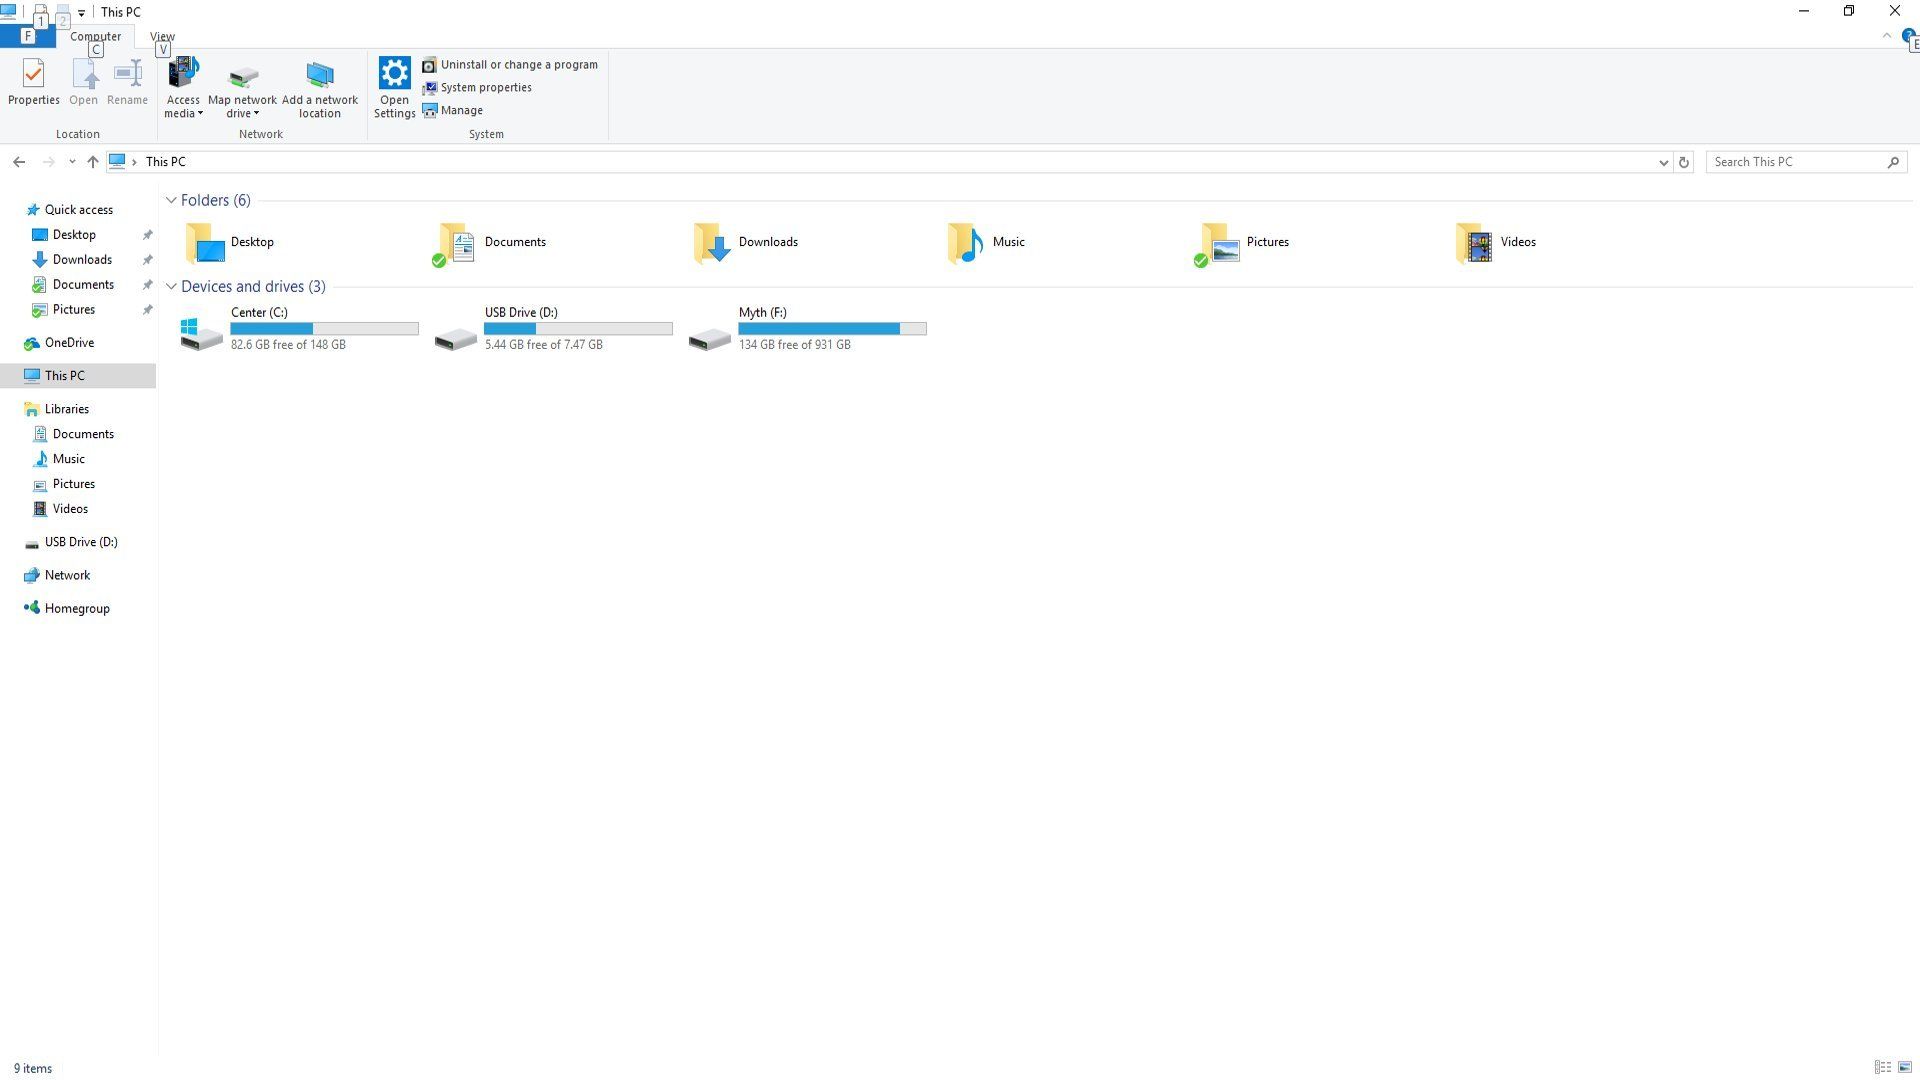 Windows 10 - File Explorer